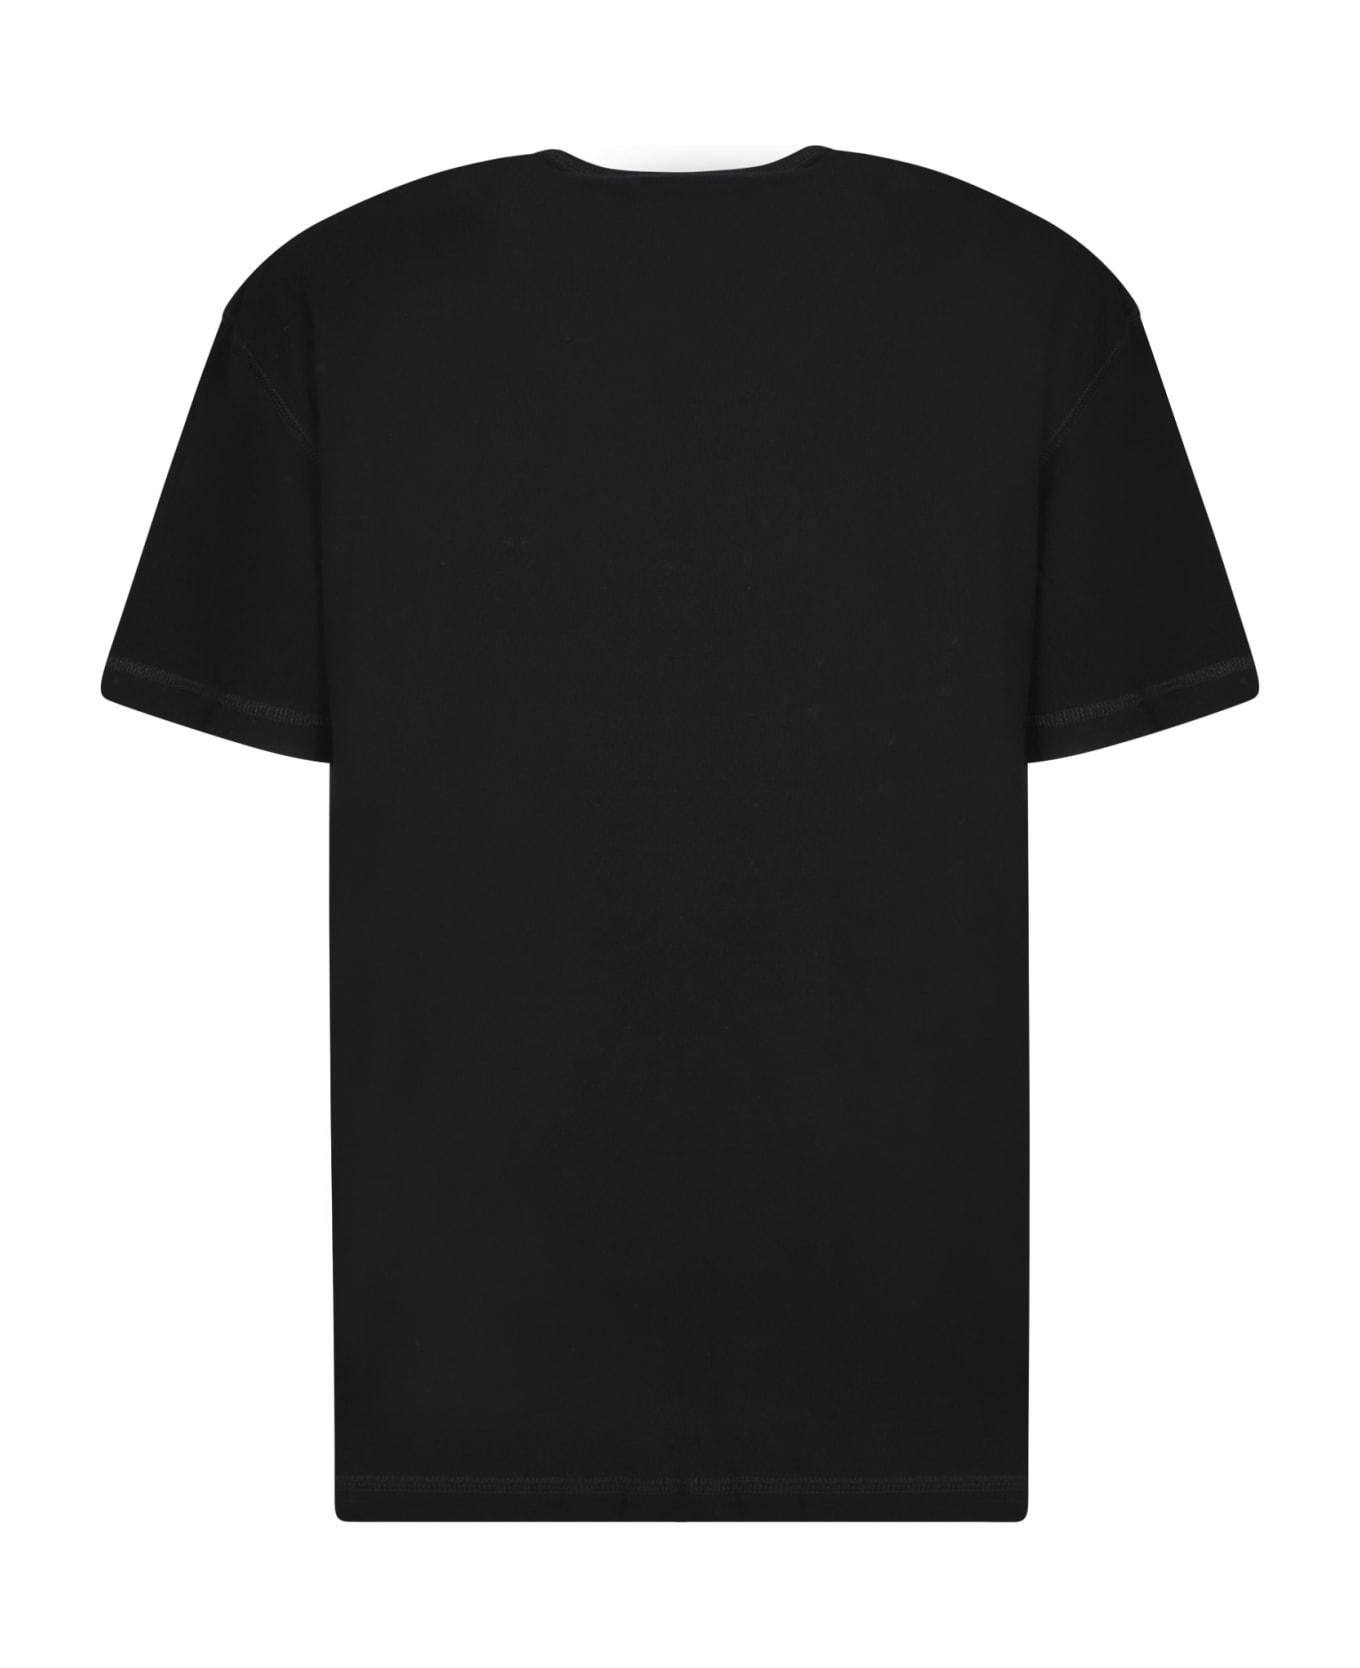 costumein Liam Black Cotton T-shirt - Black